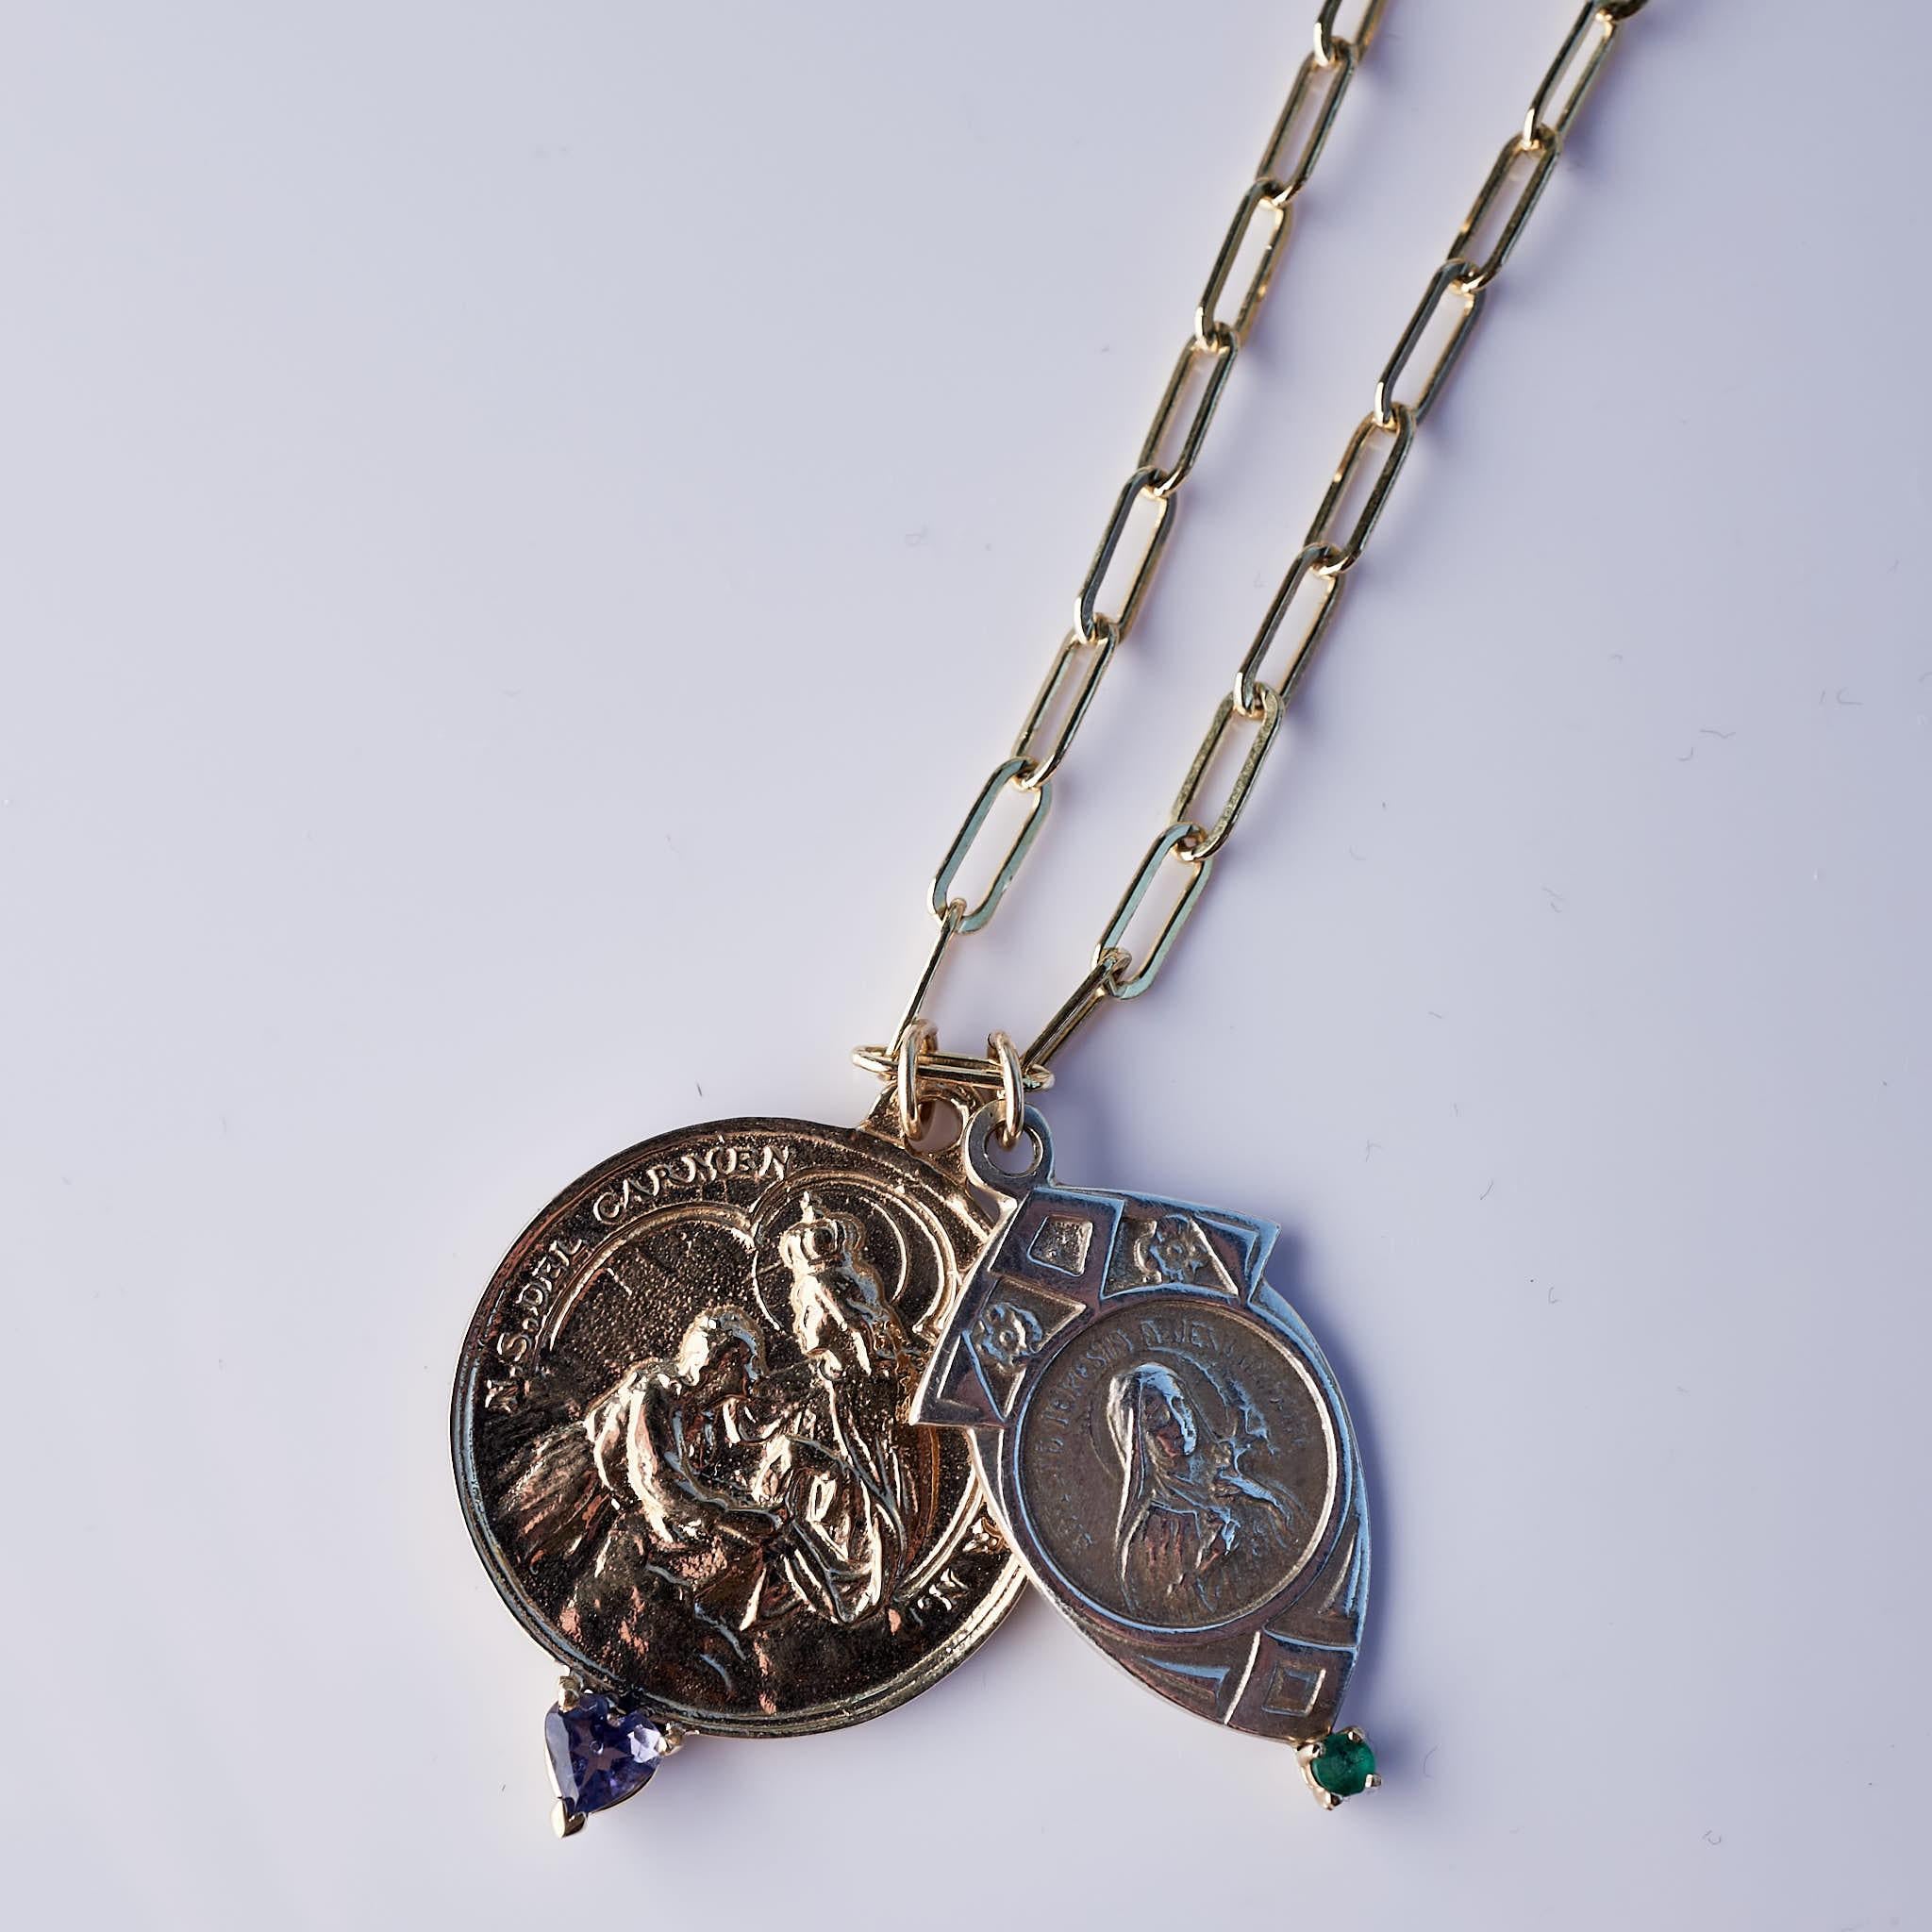 Brilliant Cut Emerald Medal Chain Necklace Virgin Mary Heart Tanzanite Silver Bronze J Dauphin For Sale